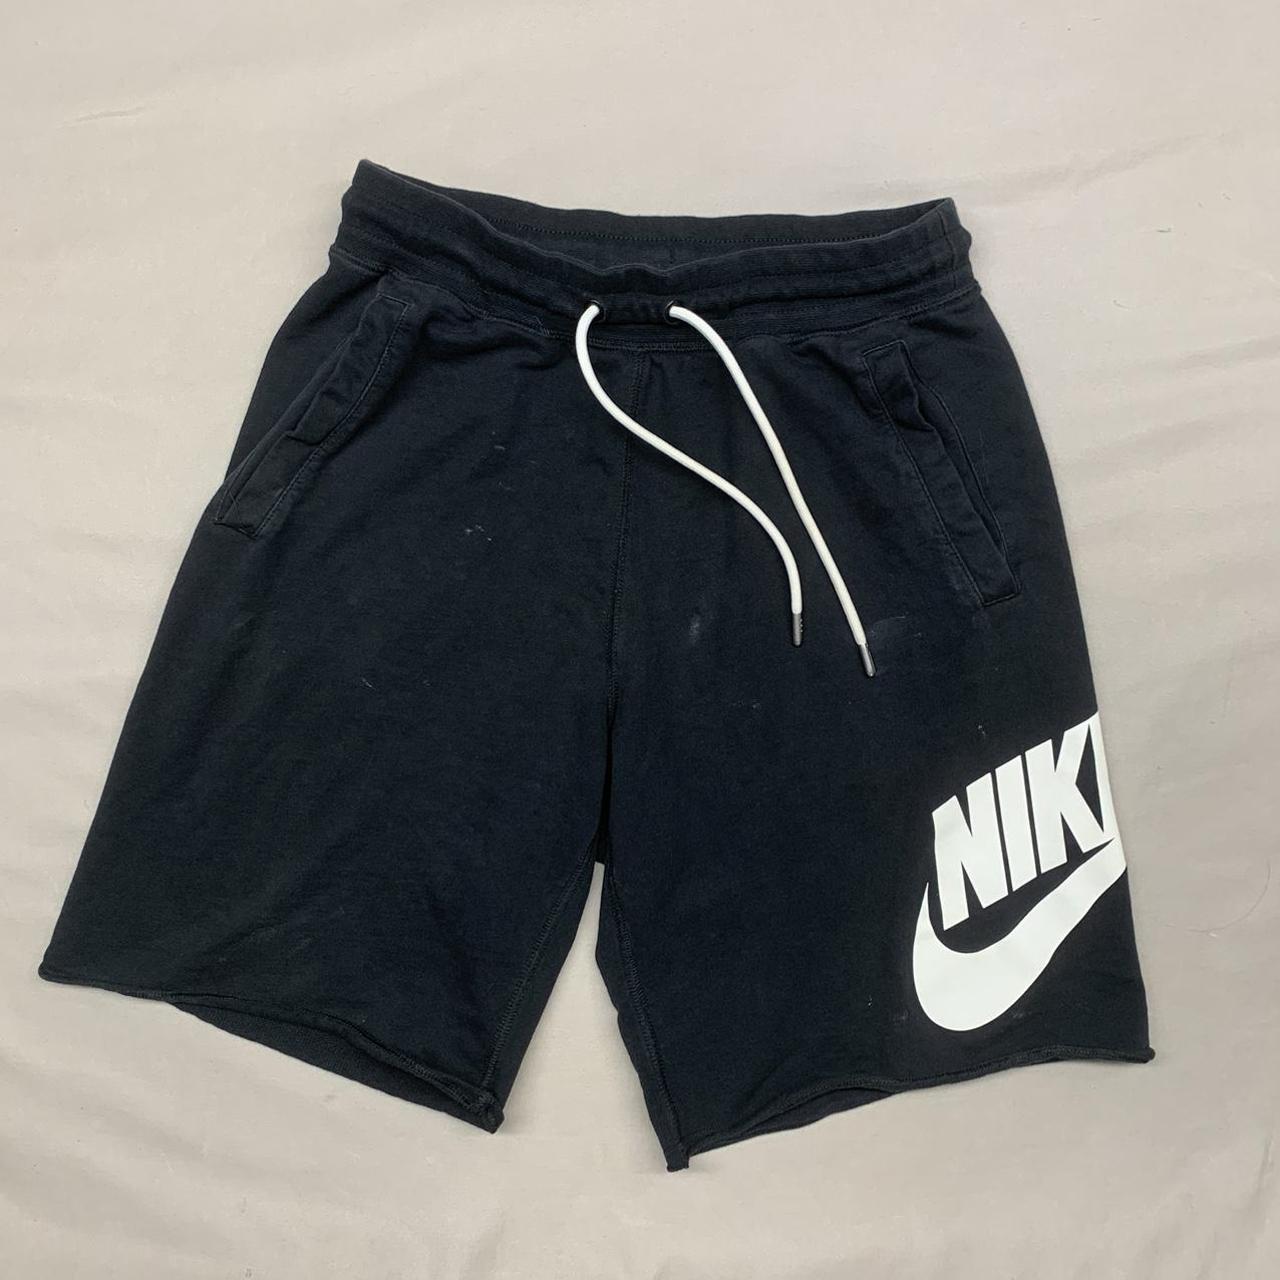 Nike Men's Black and White Shorts | Depop